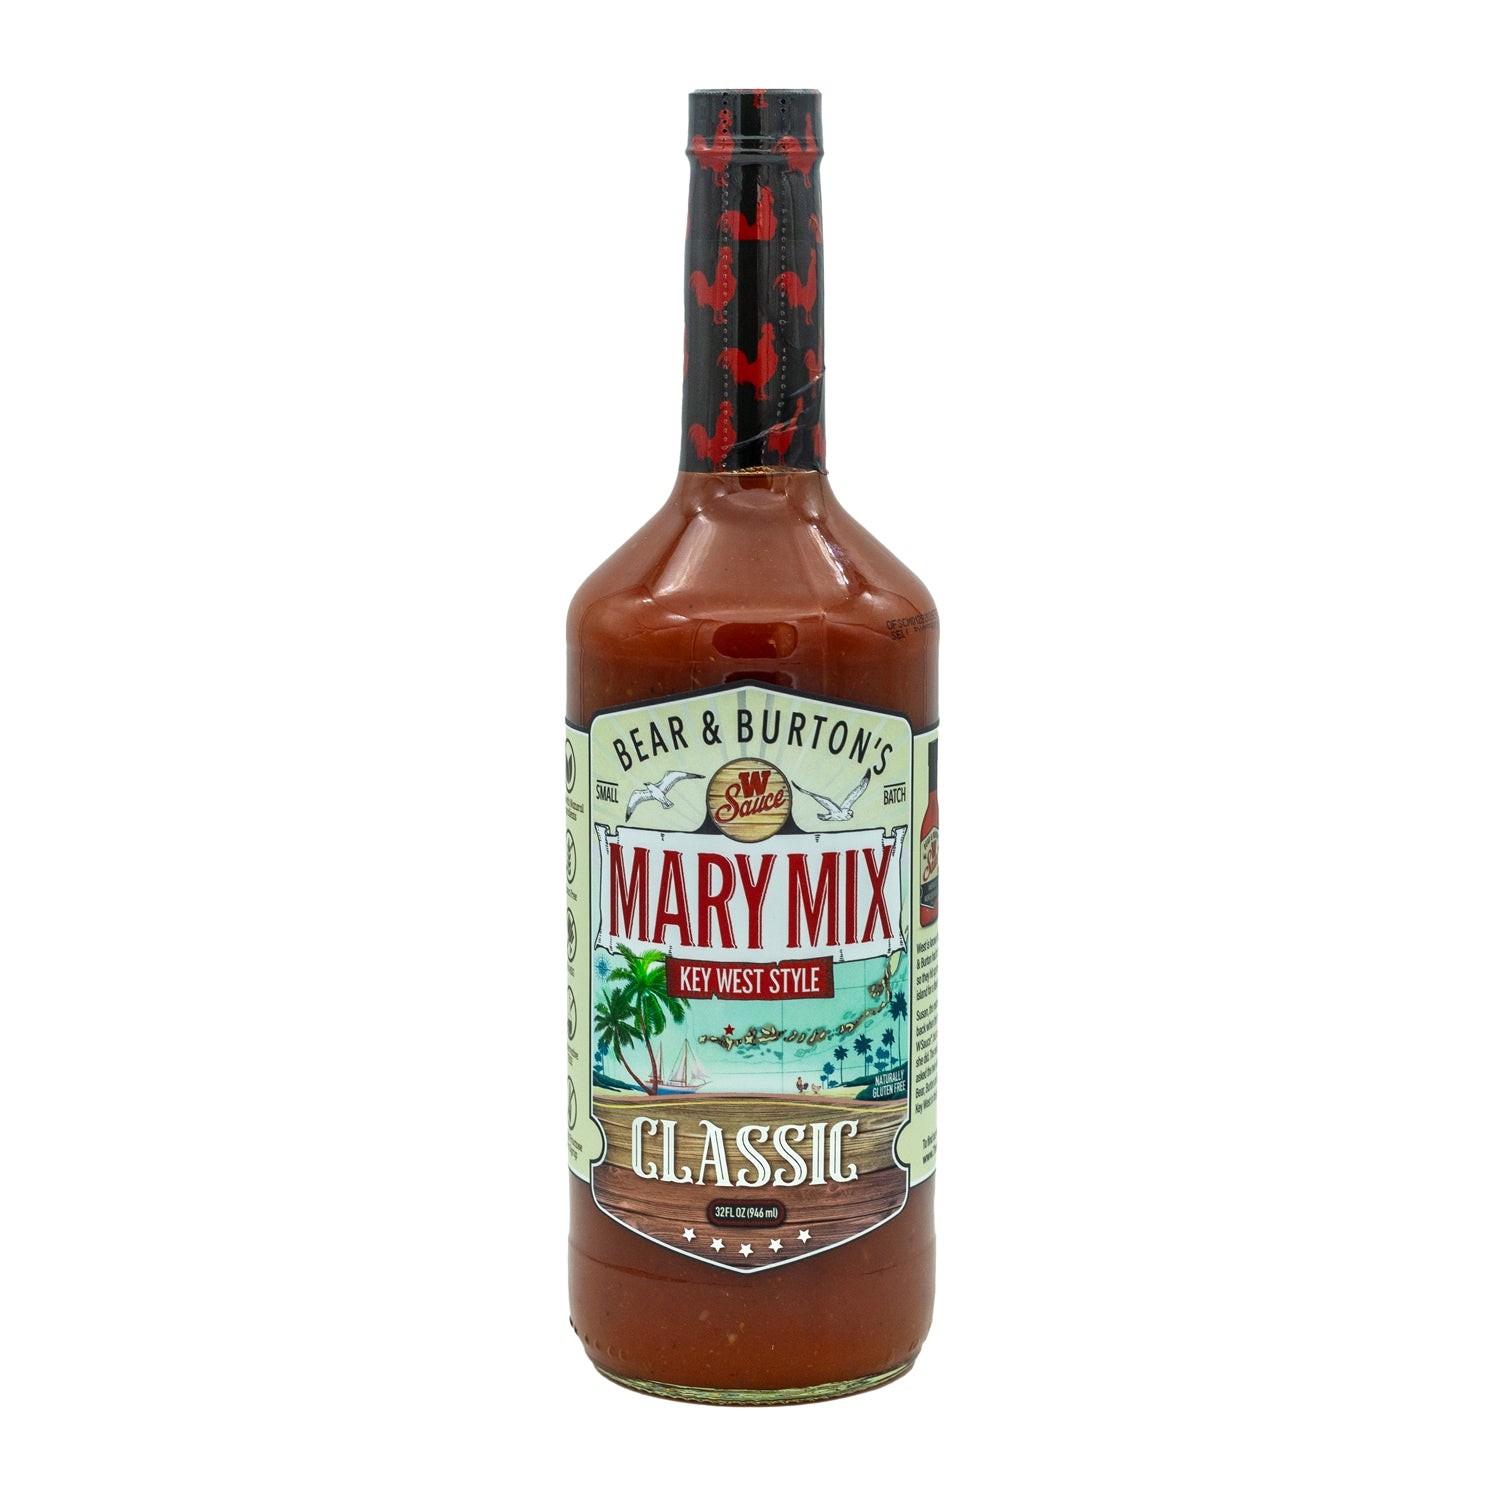 The Mary Mix | Bear & Burtons | Key West Style Bloody Mary Mix